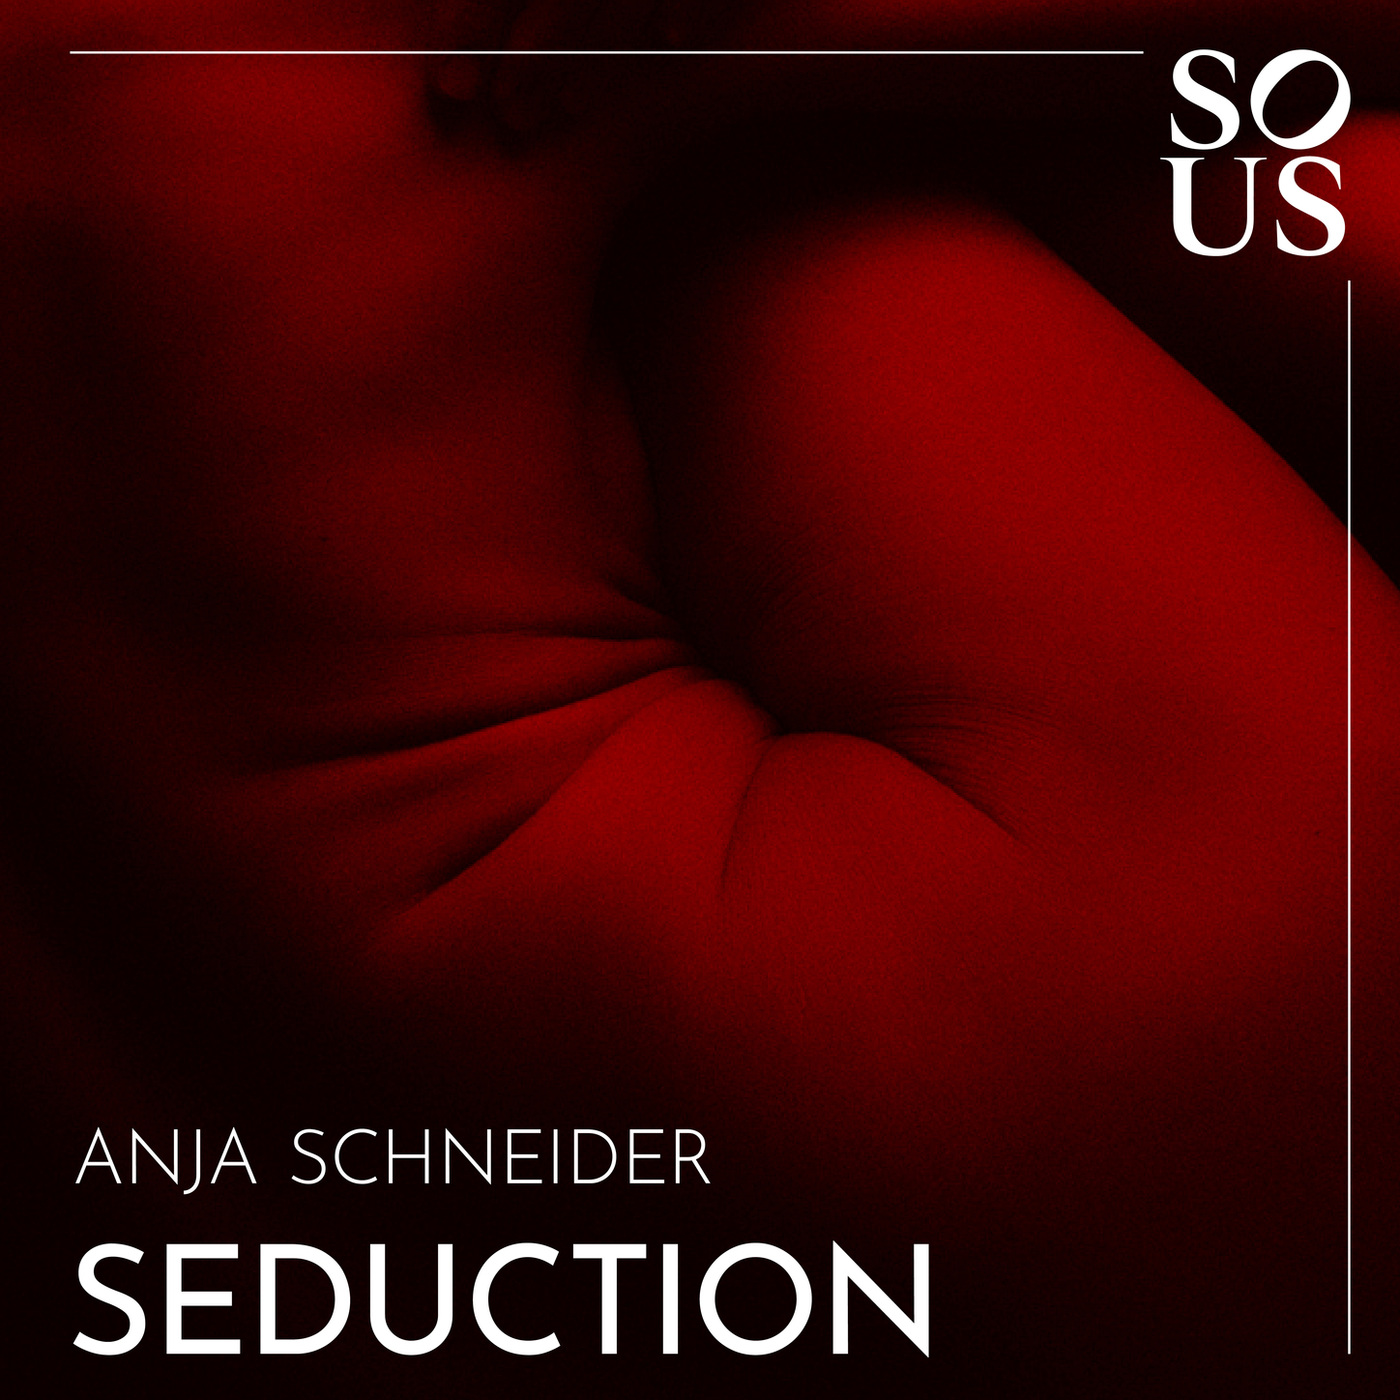 Download Anja Schneider - Seduction on Electrobuzz